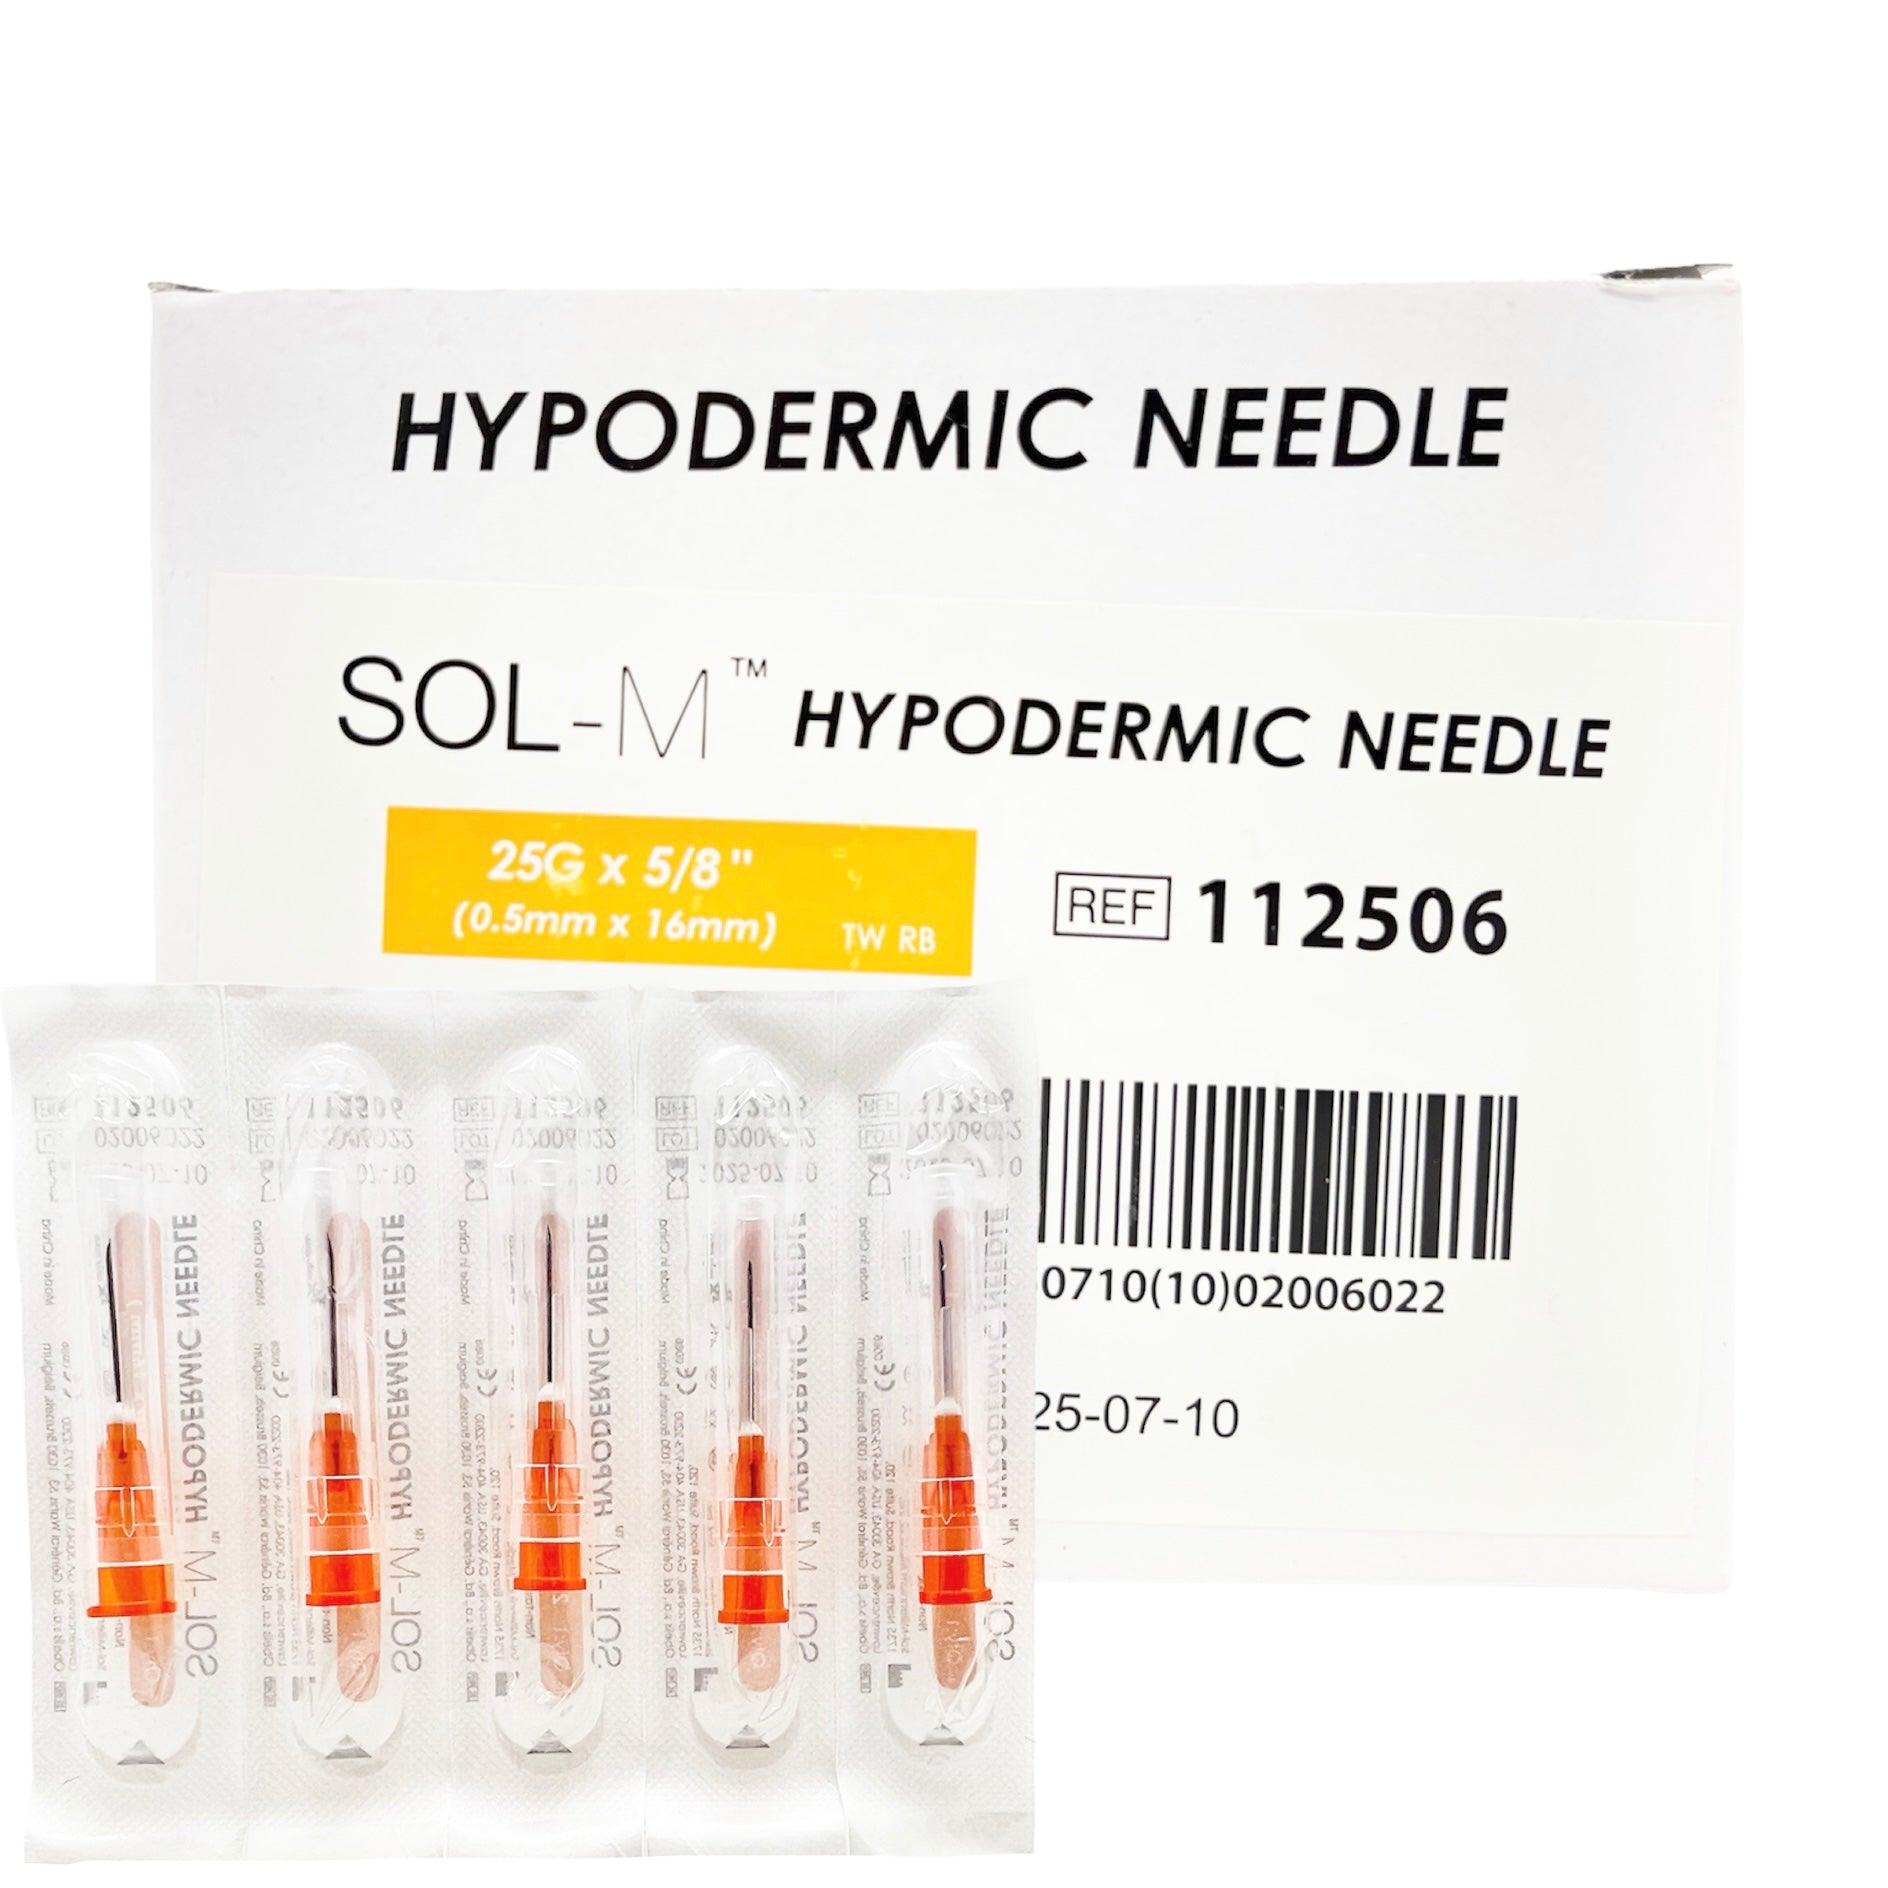 SOL-M Hypodermic Needle 25G x 5/8" TW RB (100pcs/box)